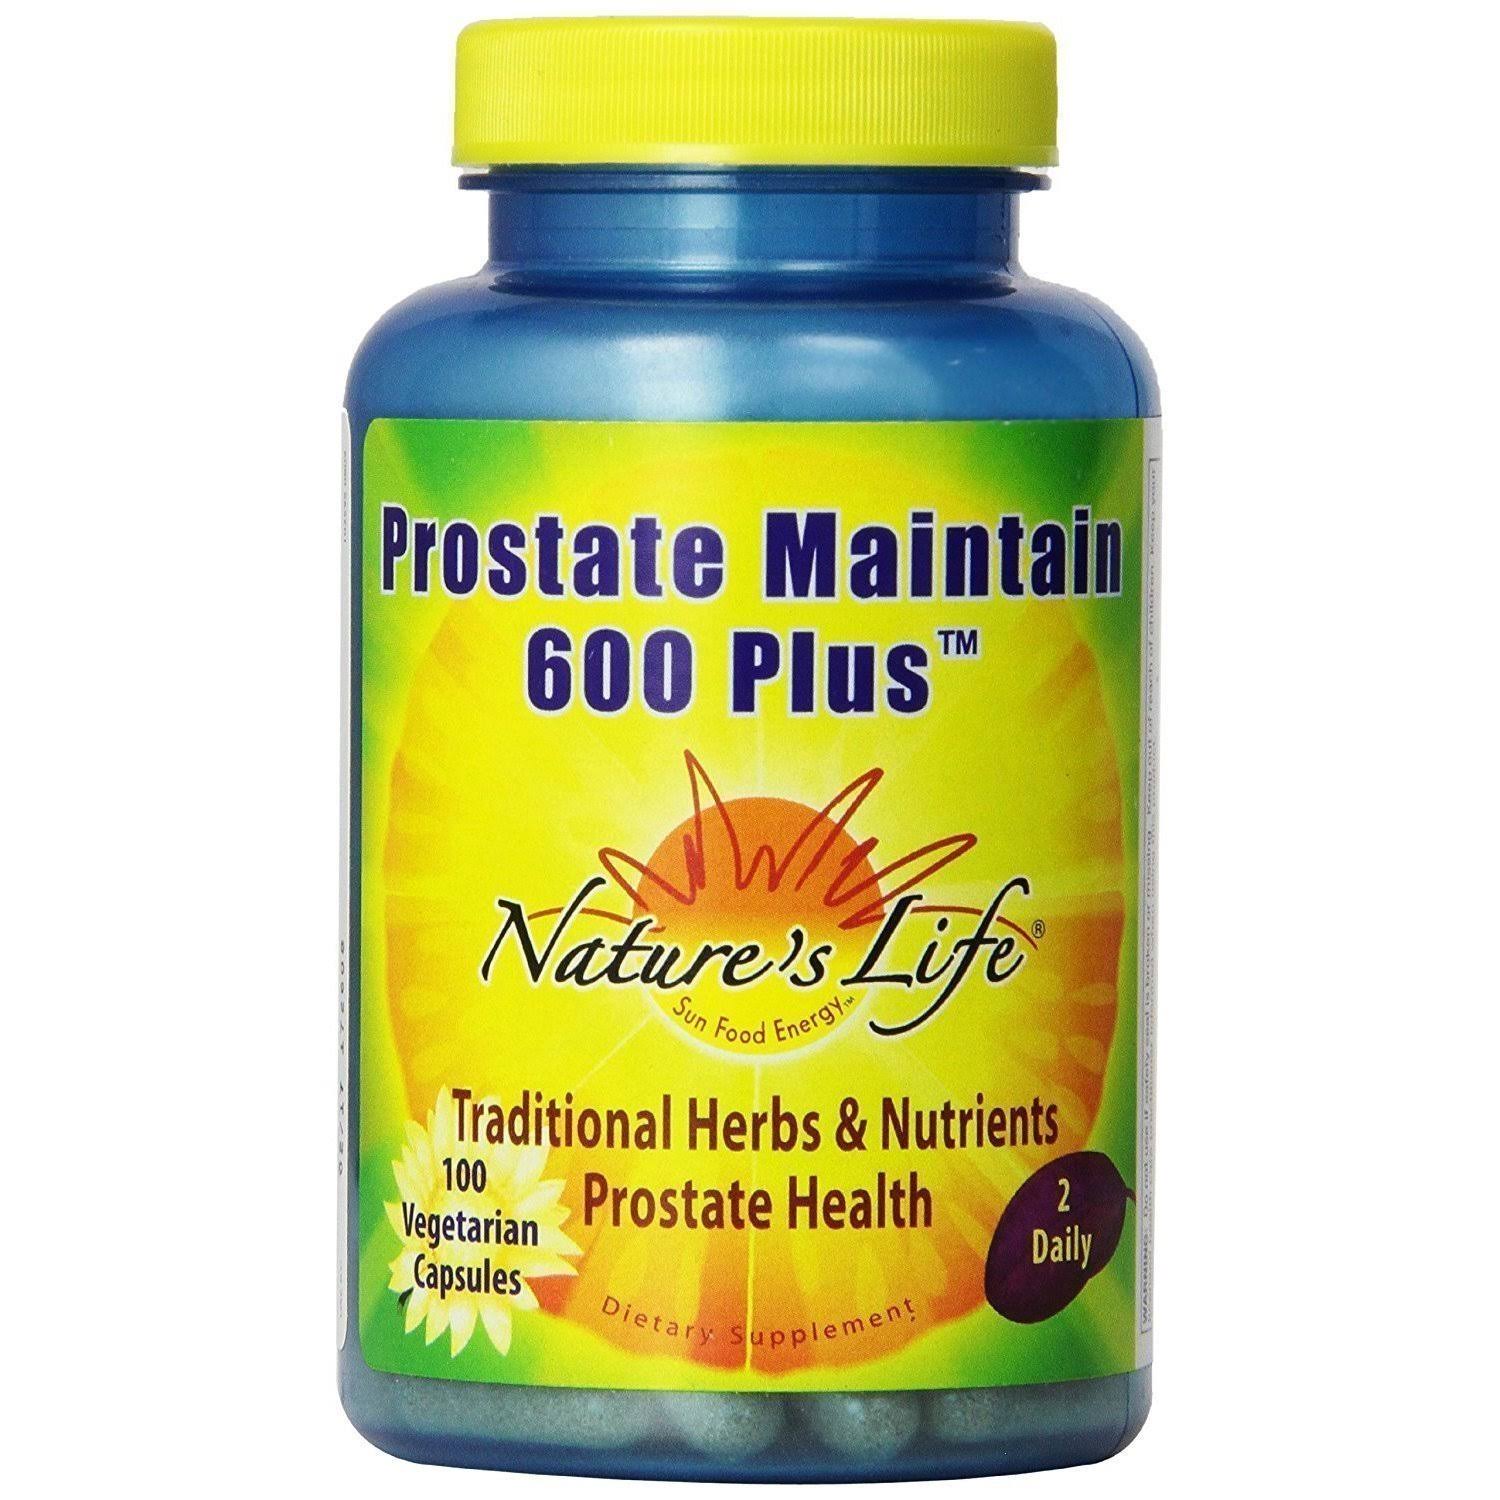 Nature's Life Prostate Maintain 600 Plus Supplement - 100 Vegetarian Capsules